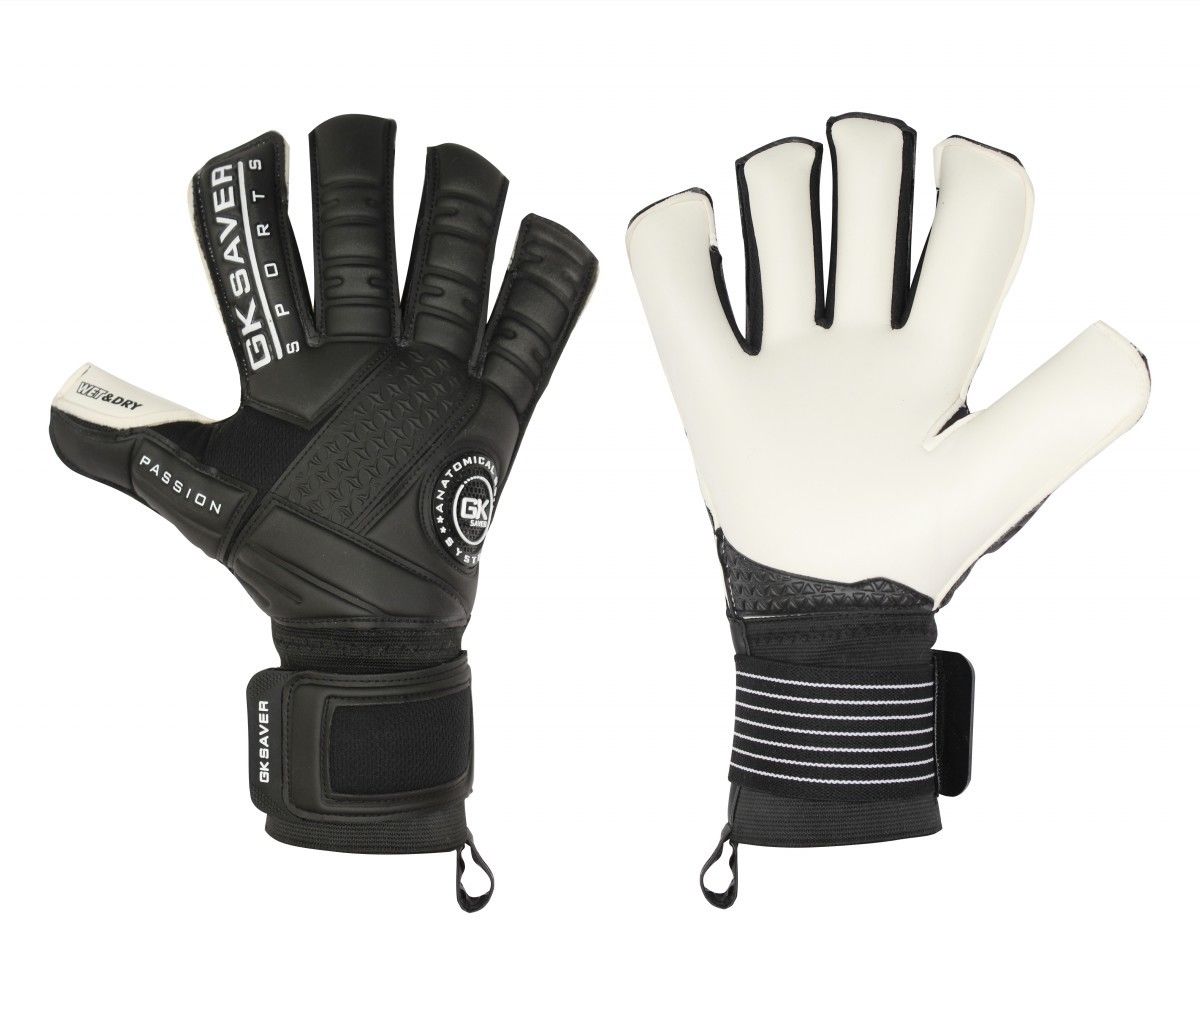 Football Soccer Goalkeeper Gloves Professional Gk Saver Passion Ps10 Wet & Dry 